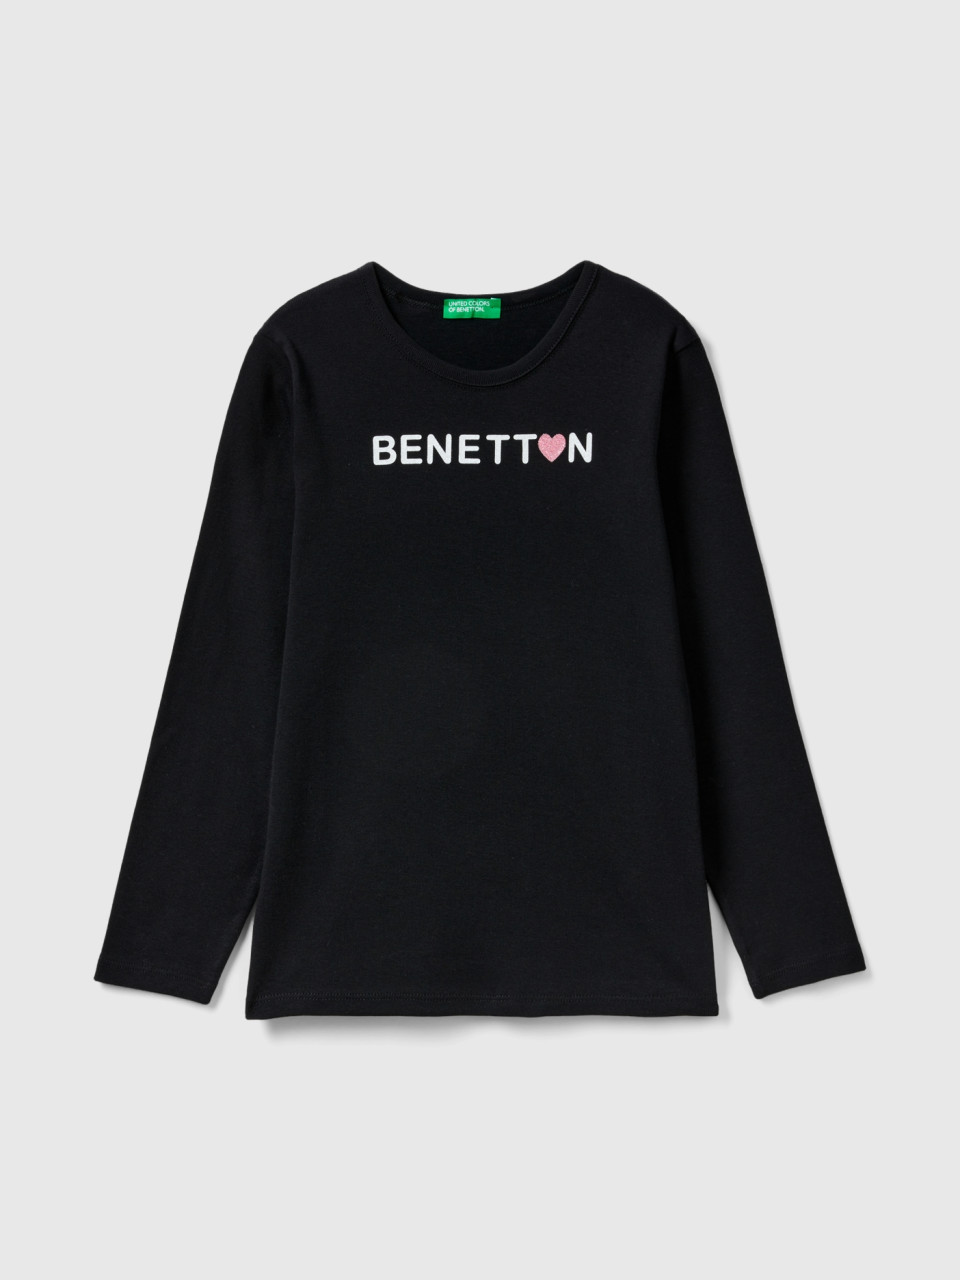 Benetton, Long Sleeve T-shirt With Glitter Print, Black, Kids